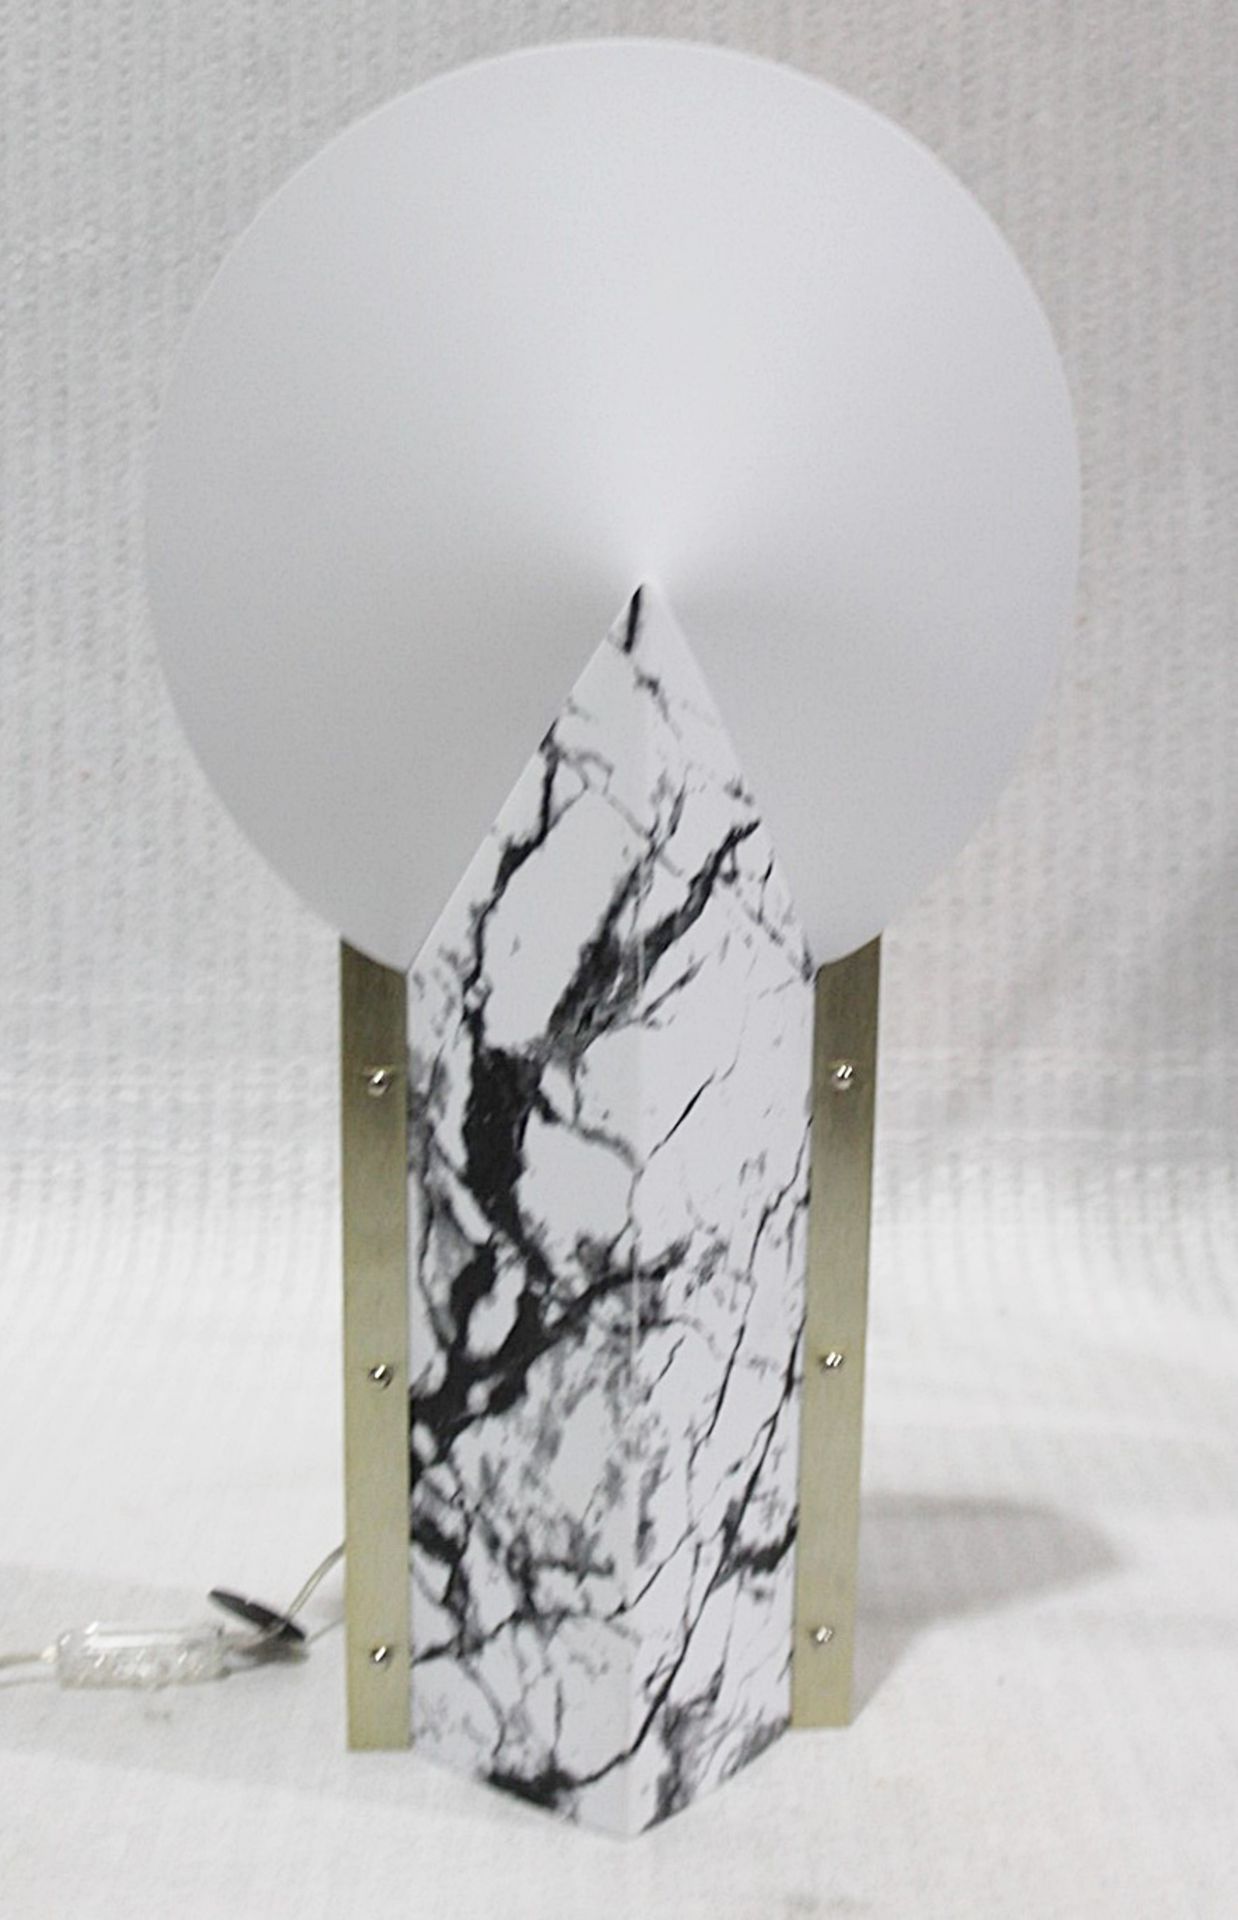 1 x SLAMP 'Moon' Designer Lamp In Black - Original Price £190.00 - Image 2 of 8